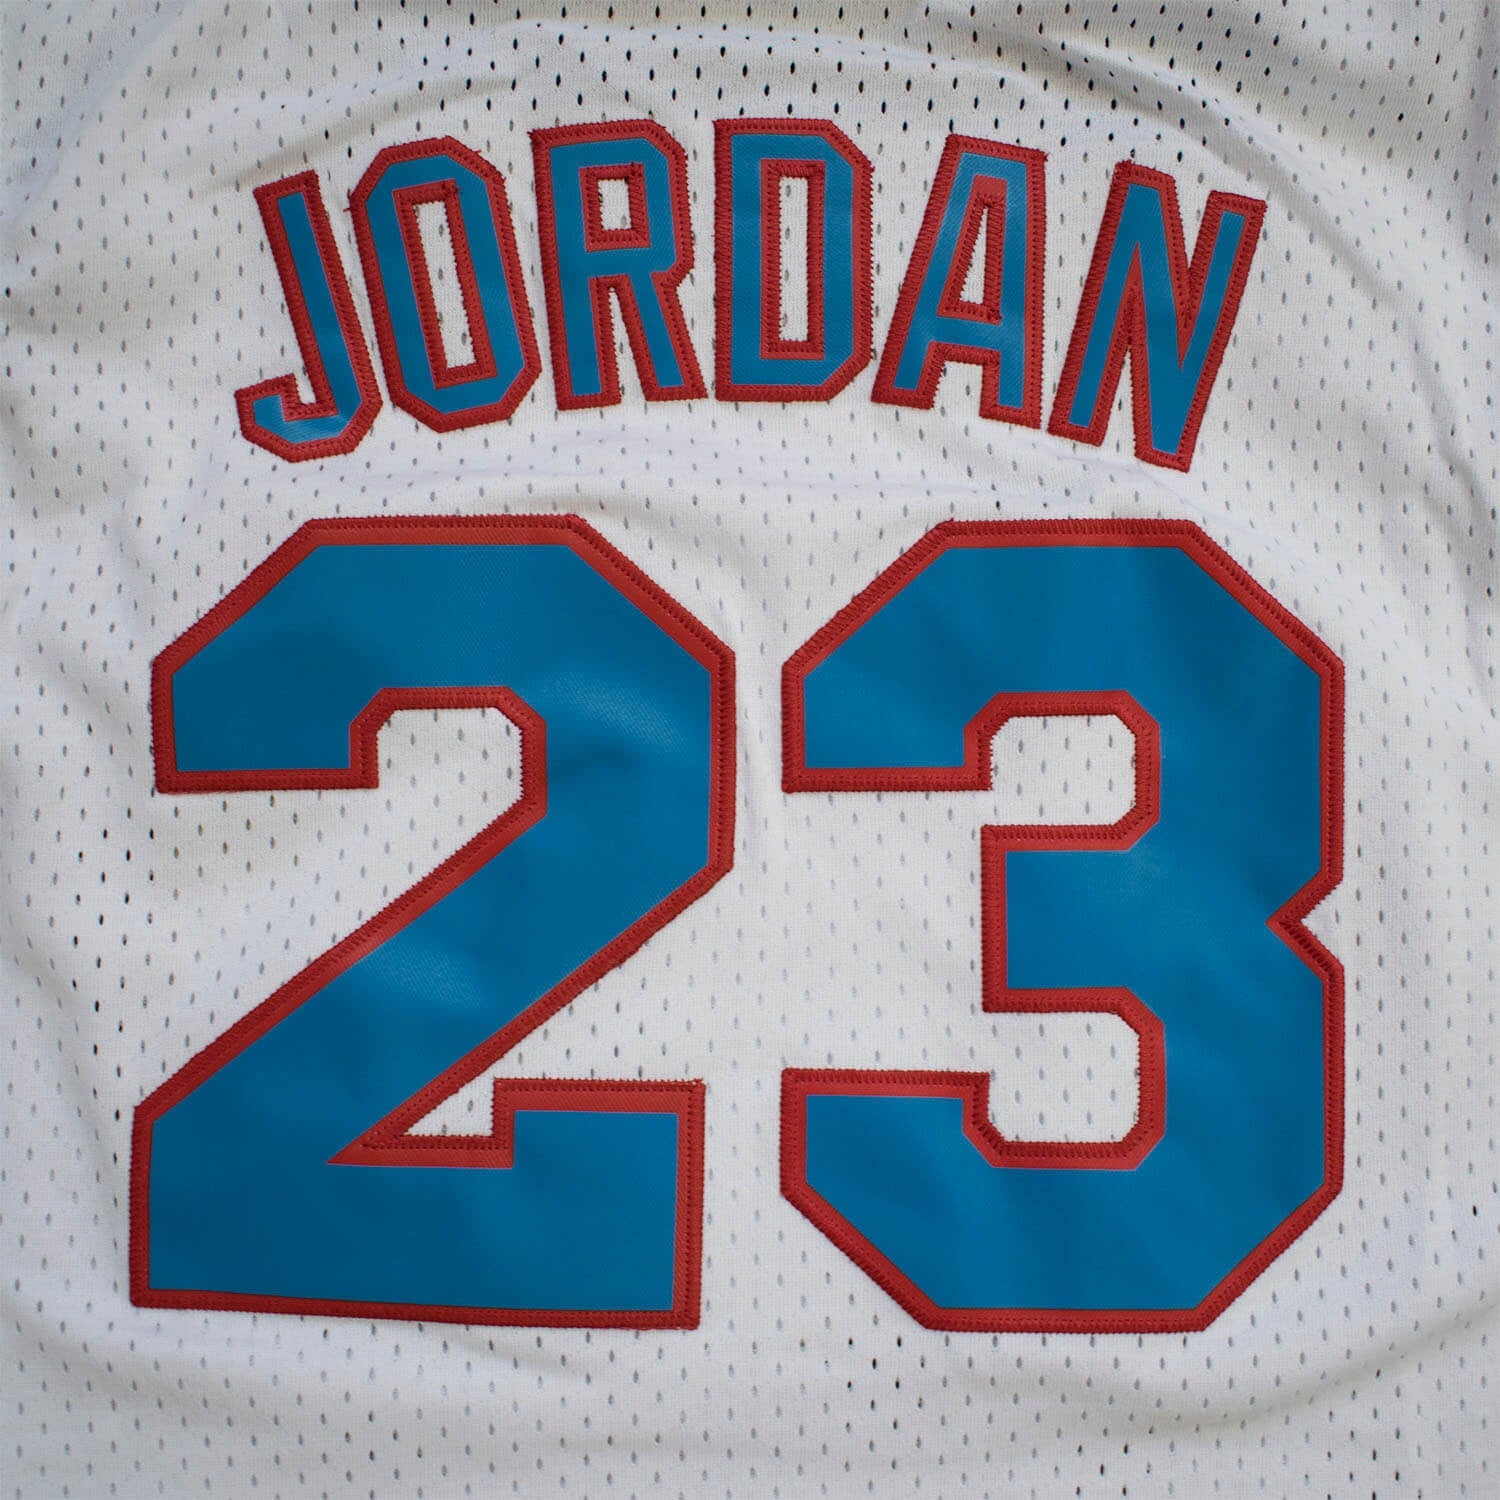 Space Jam Basketball Jersey Tune Squad Michael Jordan #23 Stitched Size XL